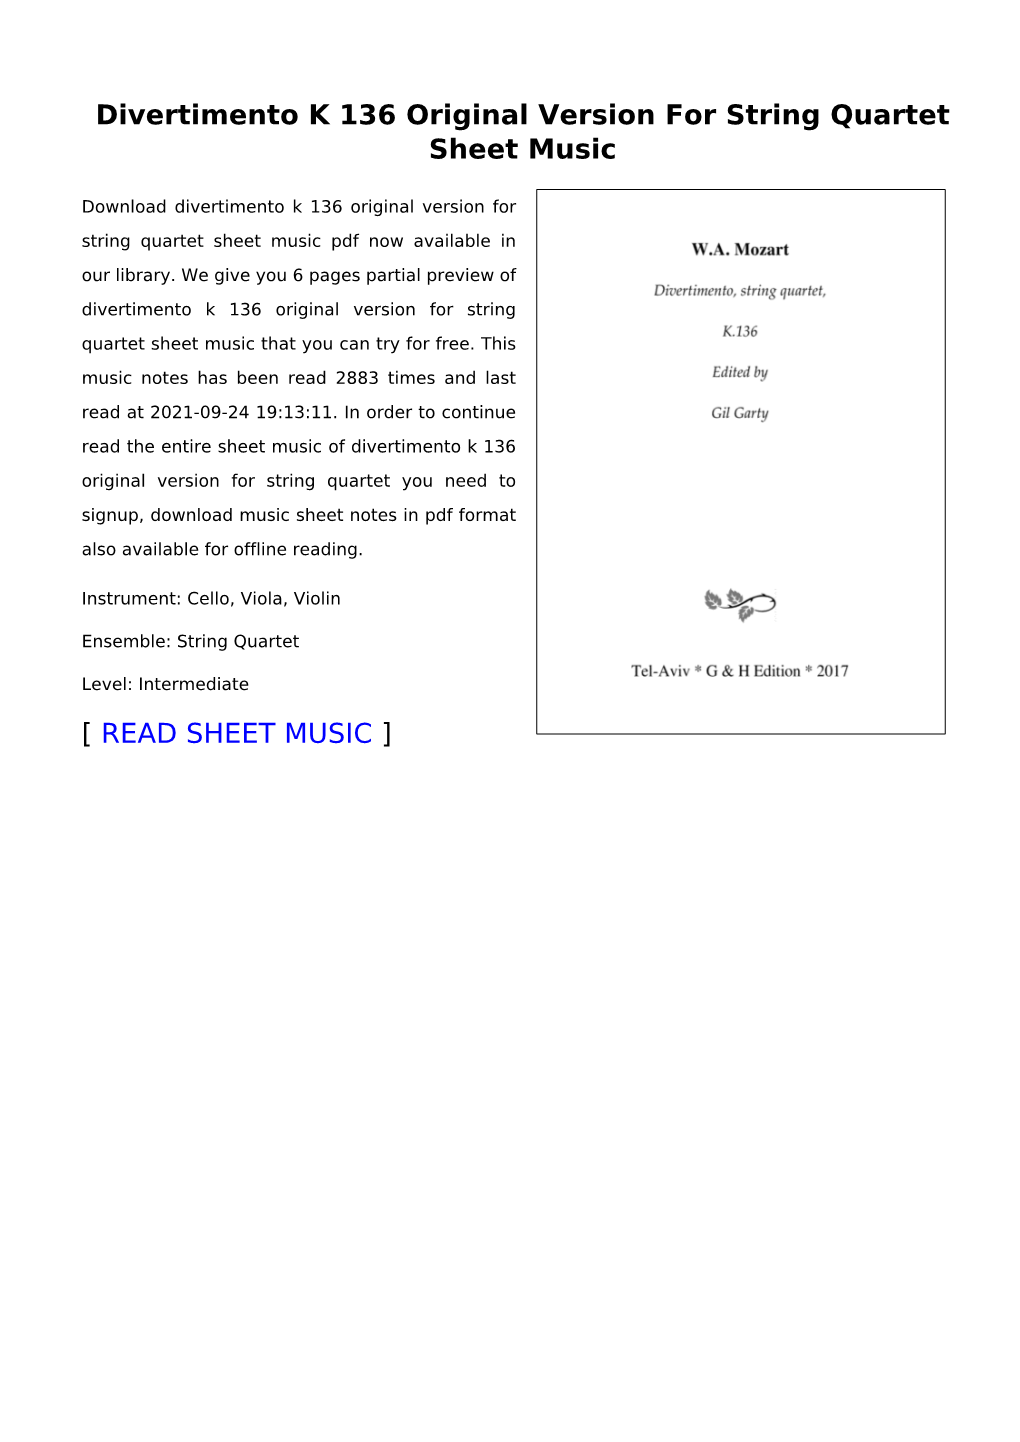 Divertimento K 136 Original Version for String Quartet Sheet Music